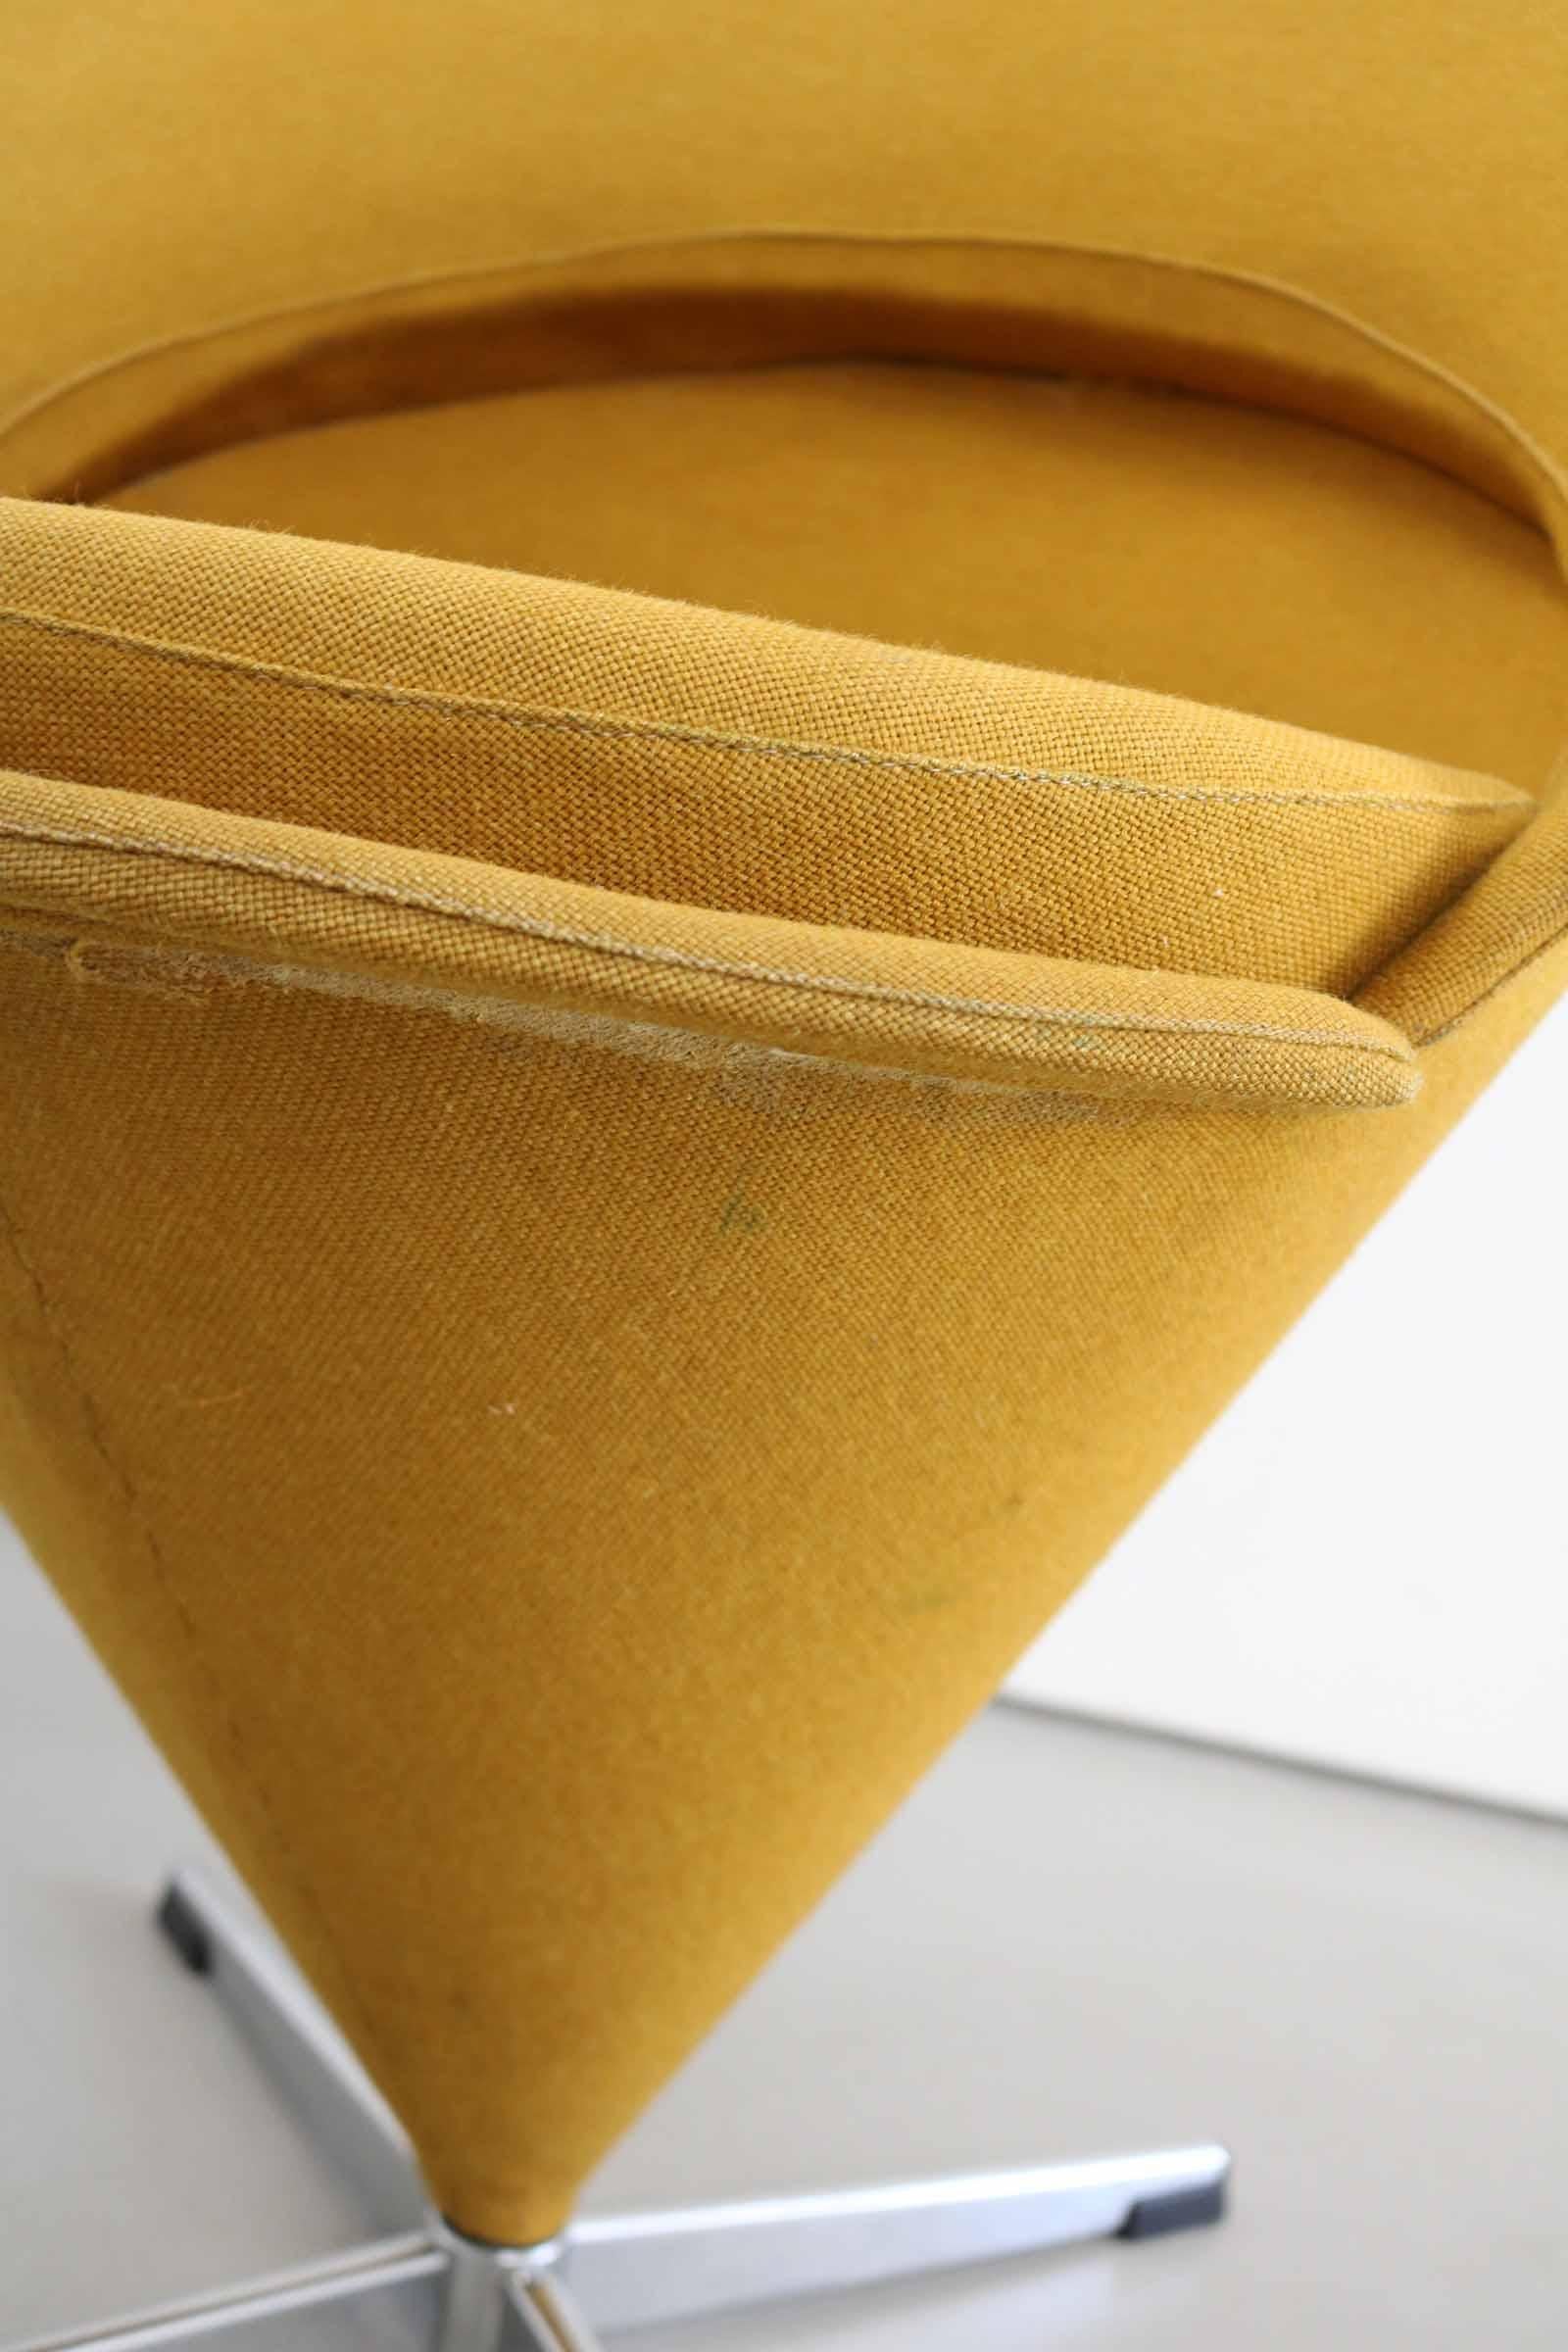 Verner Panton Mustard Yellow Cone Chair in Original Fabric, Denmark, 1960s For Sale 3